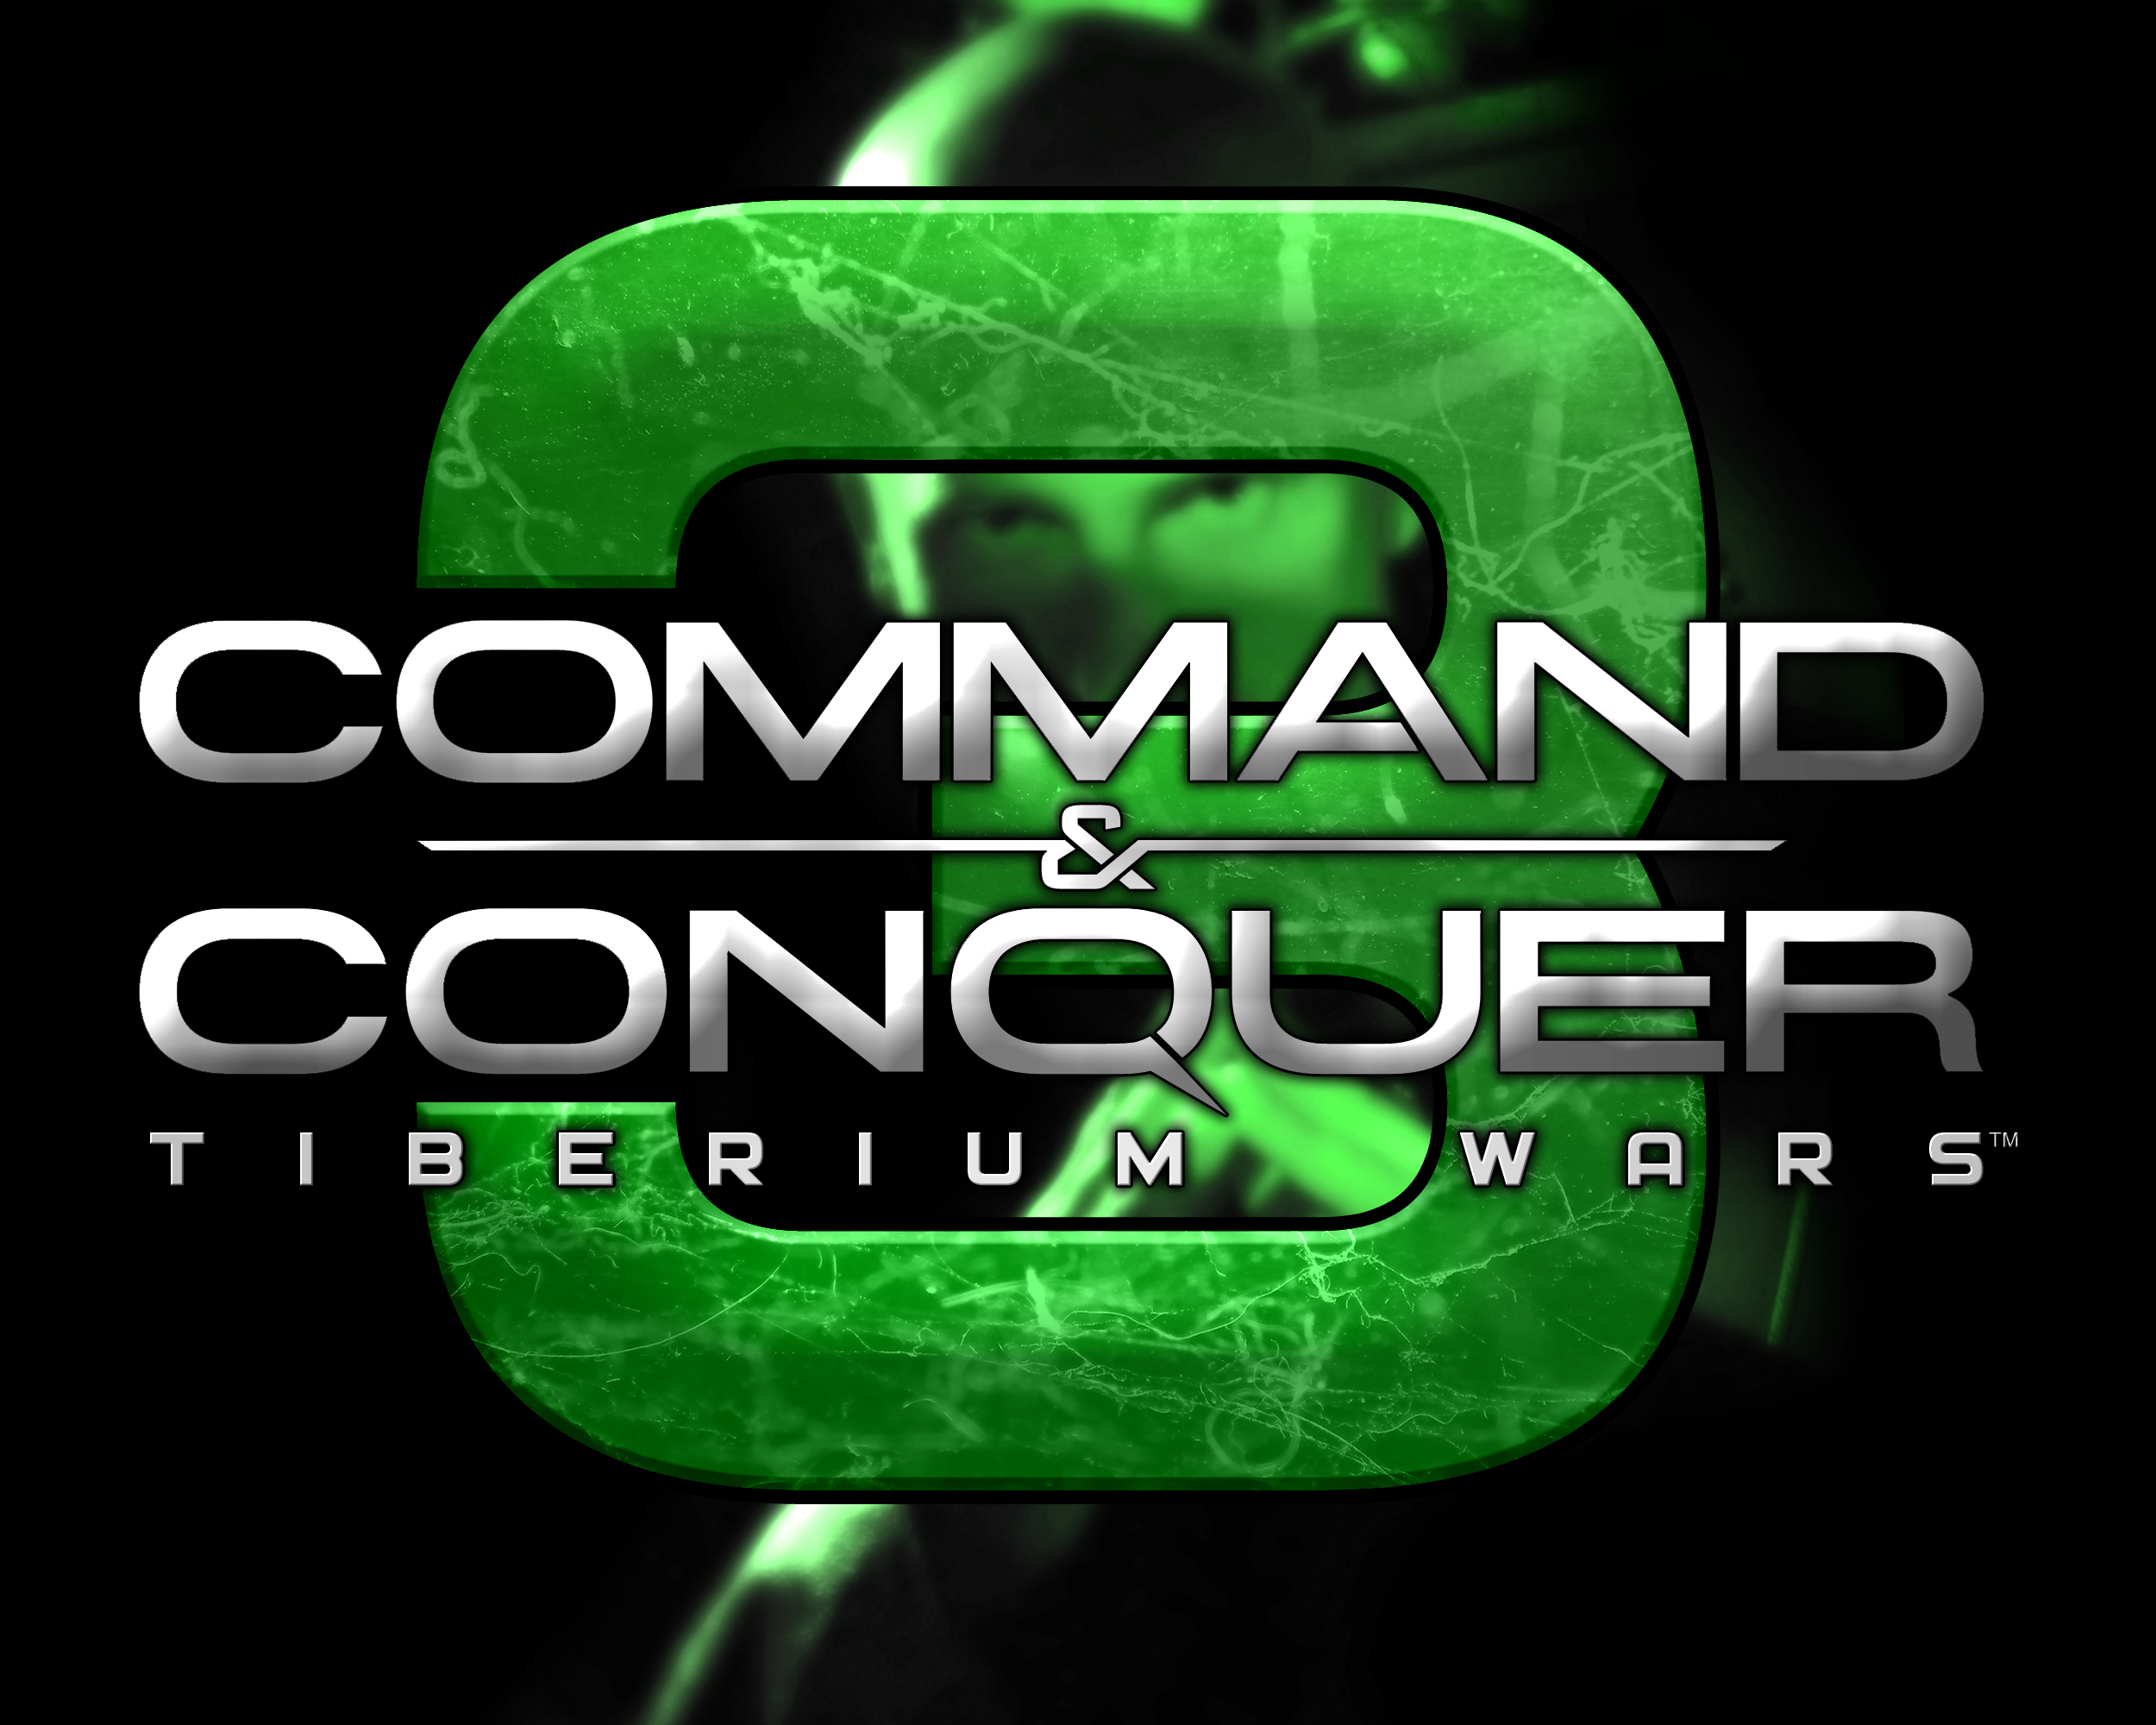 Command And Conquer 3 Tiberium Wars | НОД | Нечестная игра